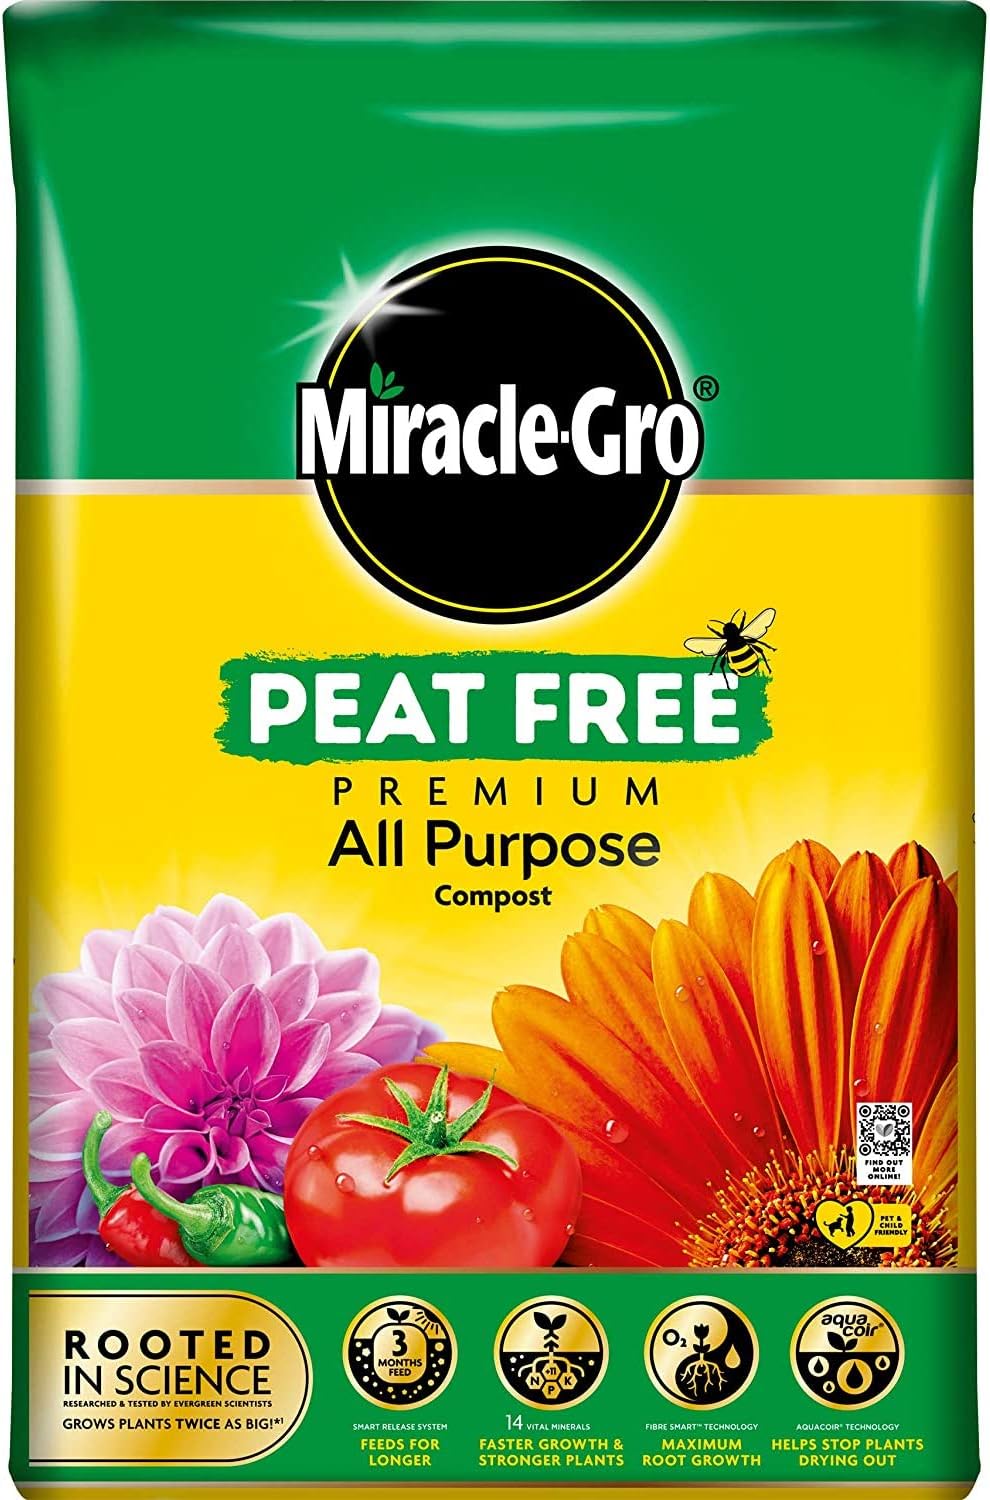 Miracle-Gro All Purpose Peat Free Premium Compost